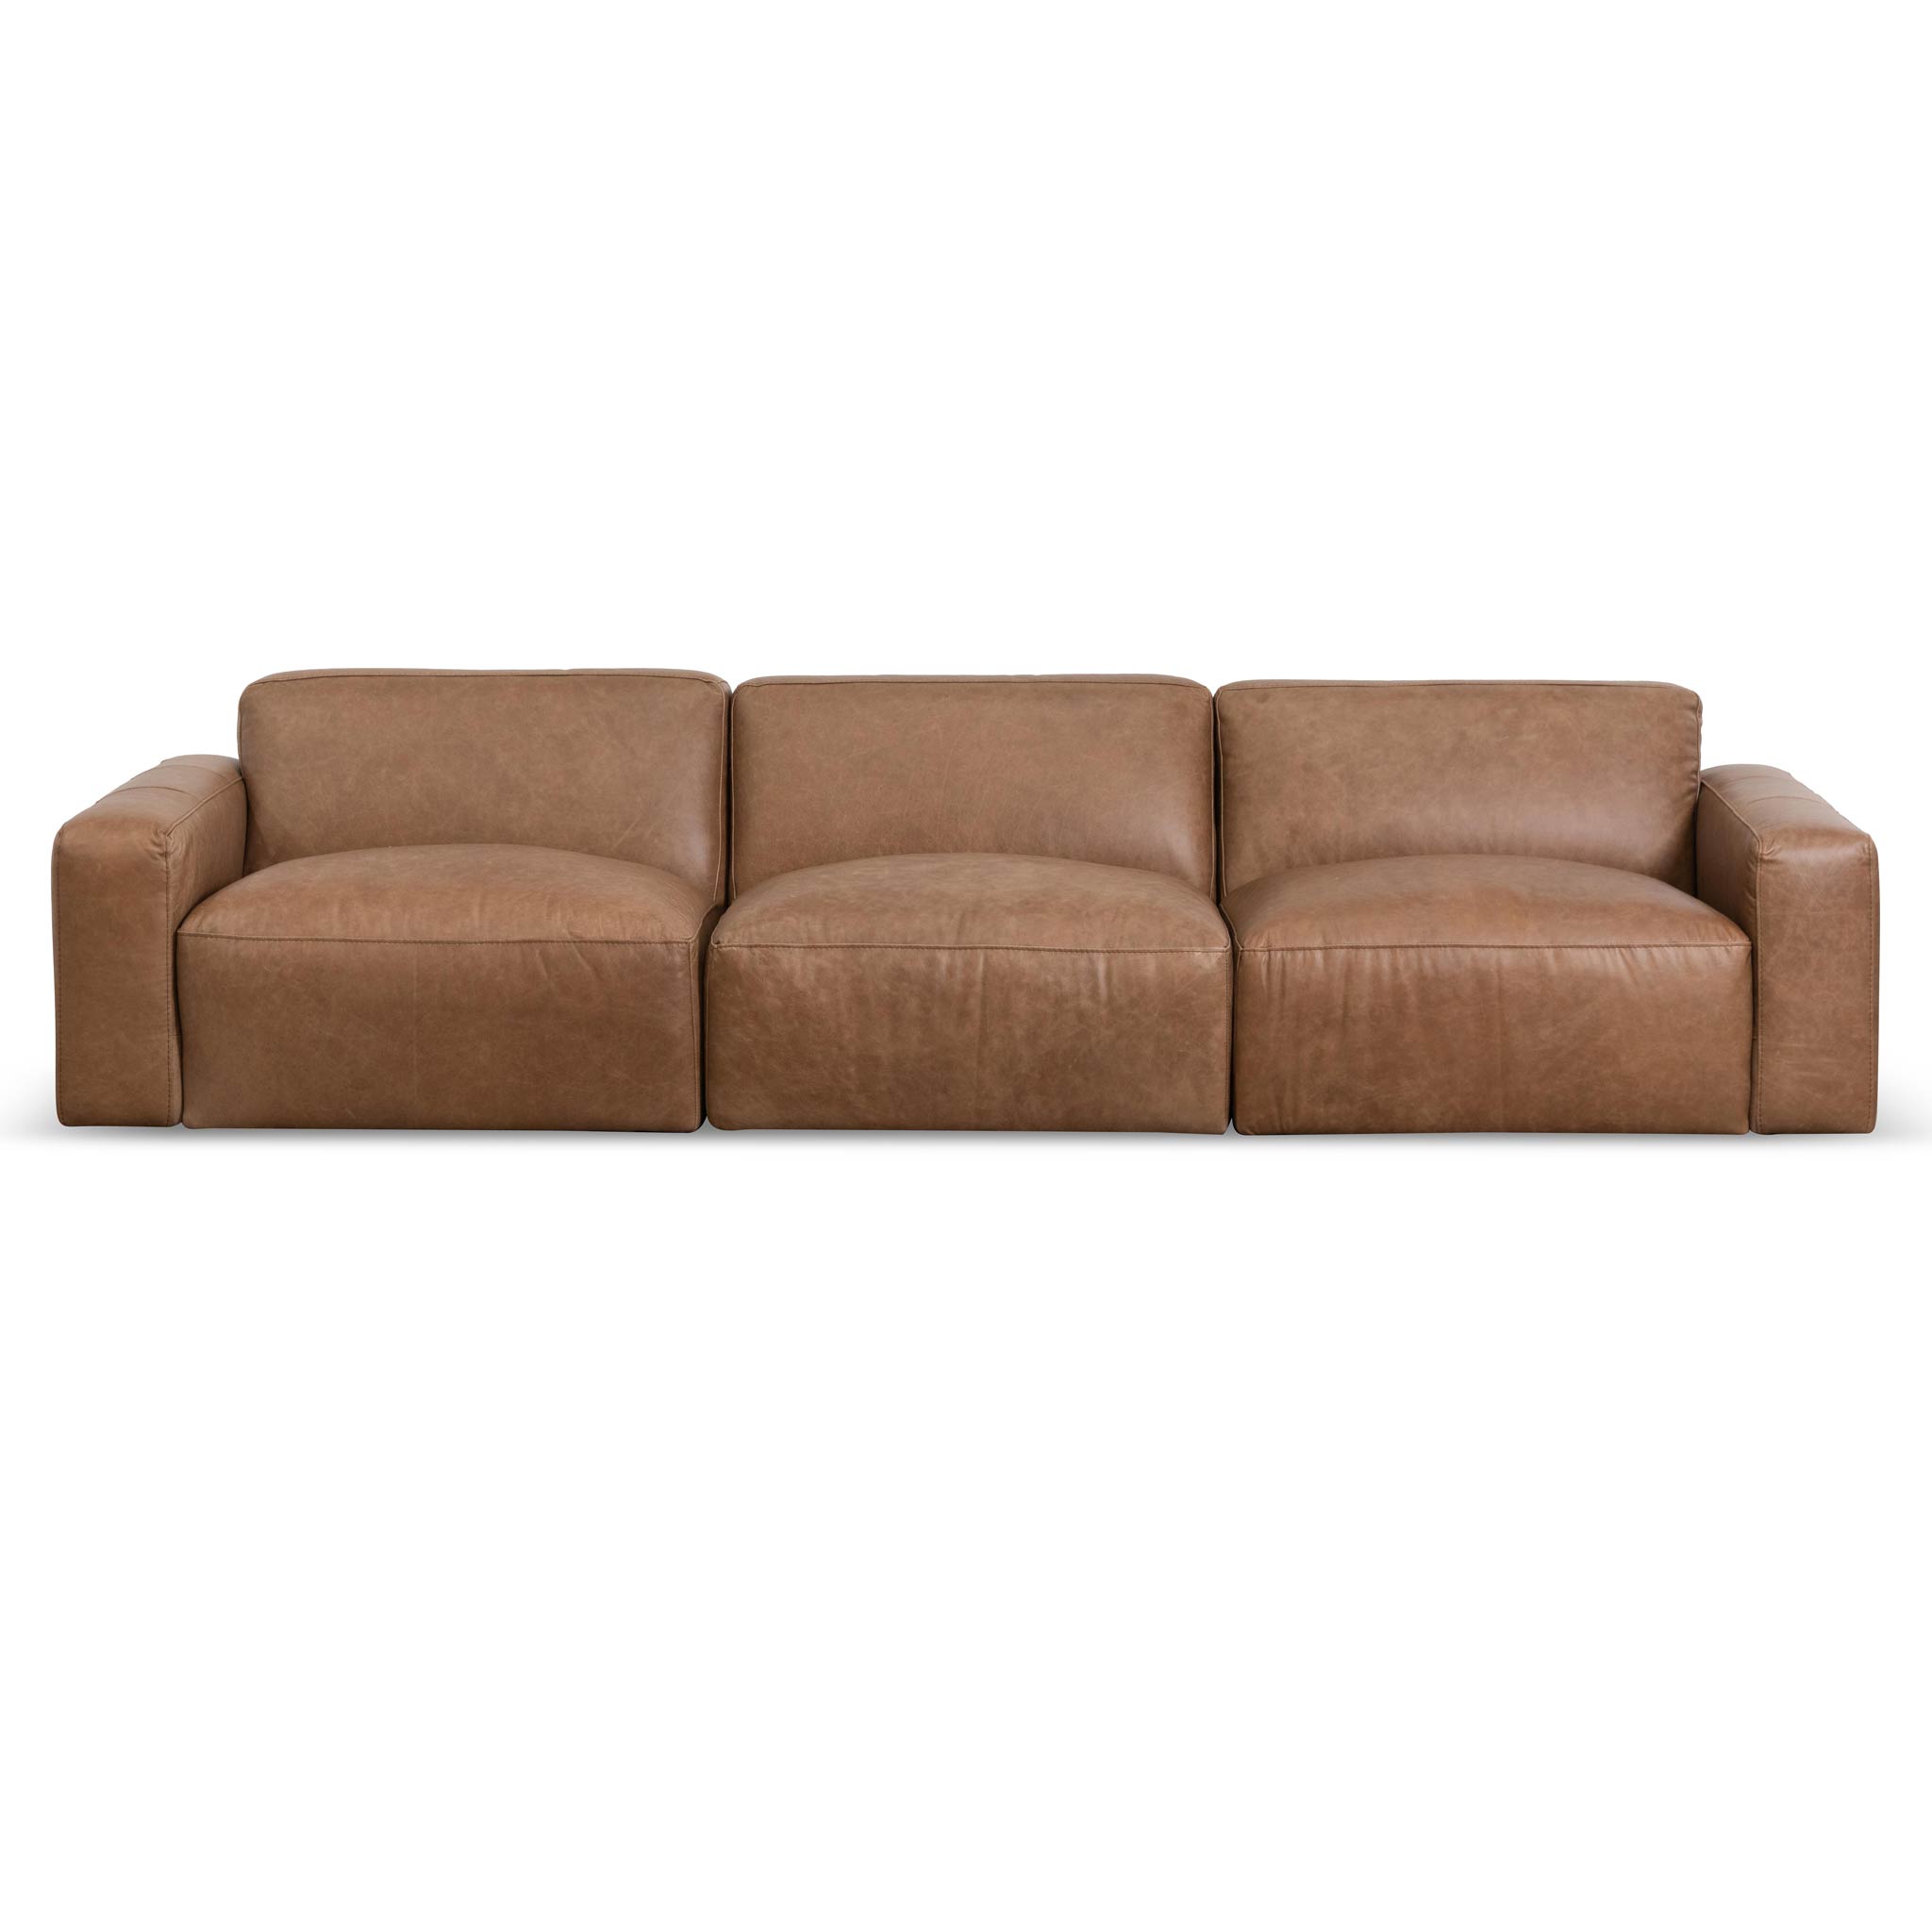 Matilda 3S Sofa - Saddle Brown Leather - Sofas